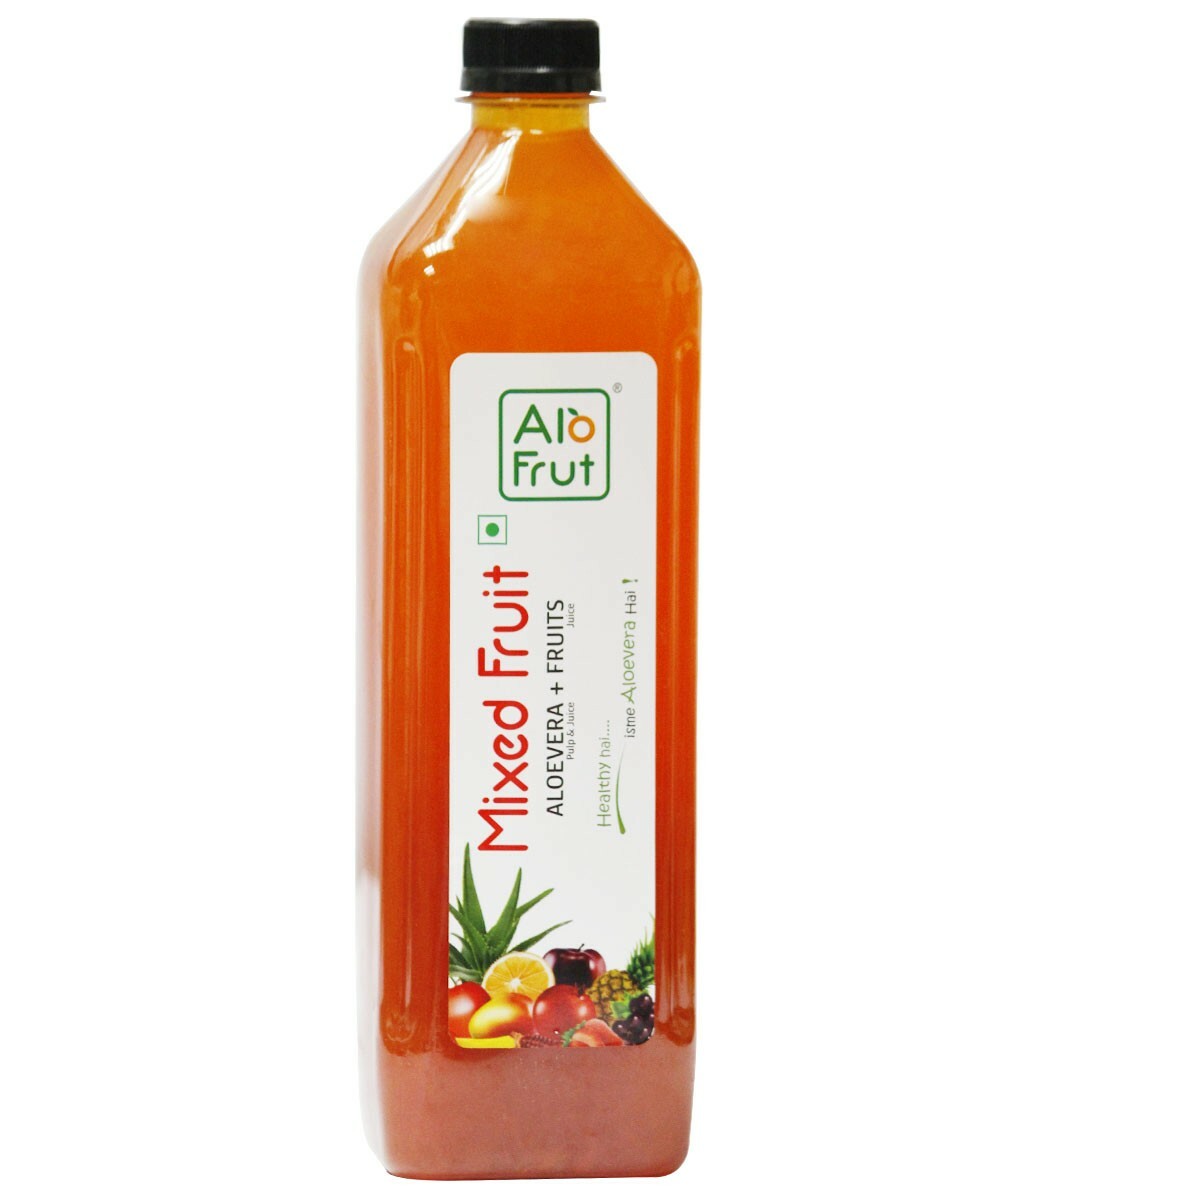 Alo Fruit Aloe Juice Mixed Fruit 1L